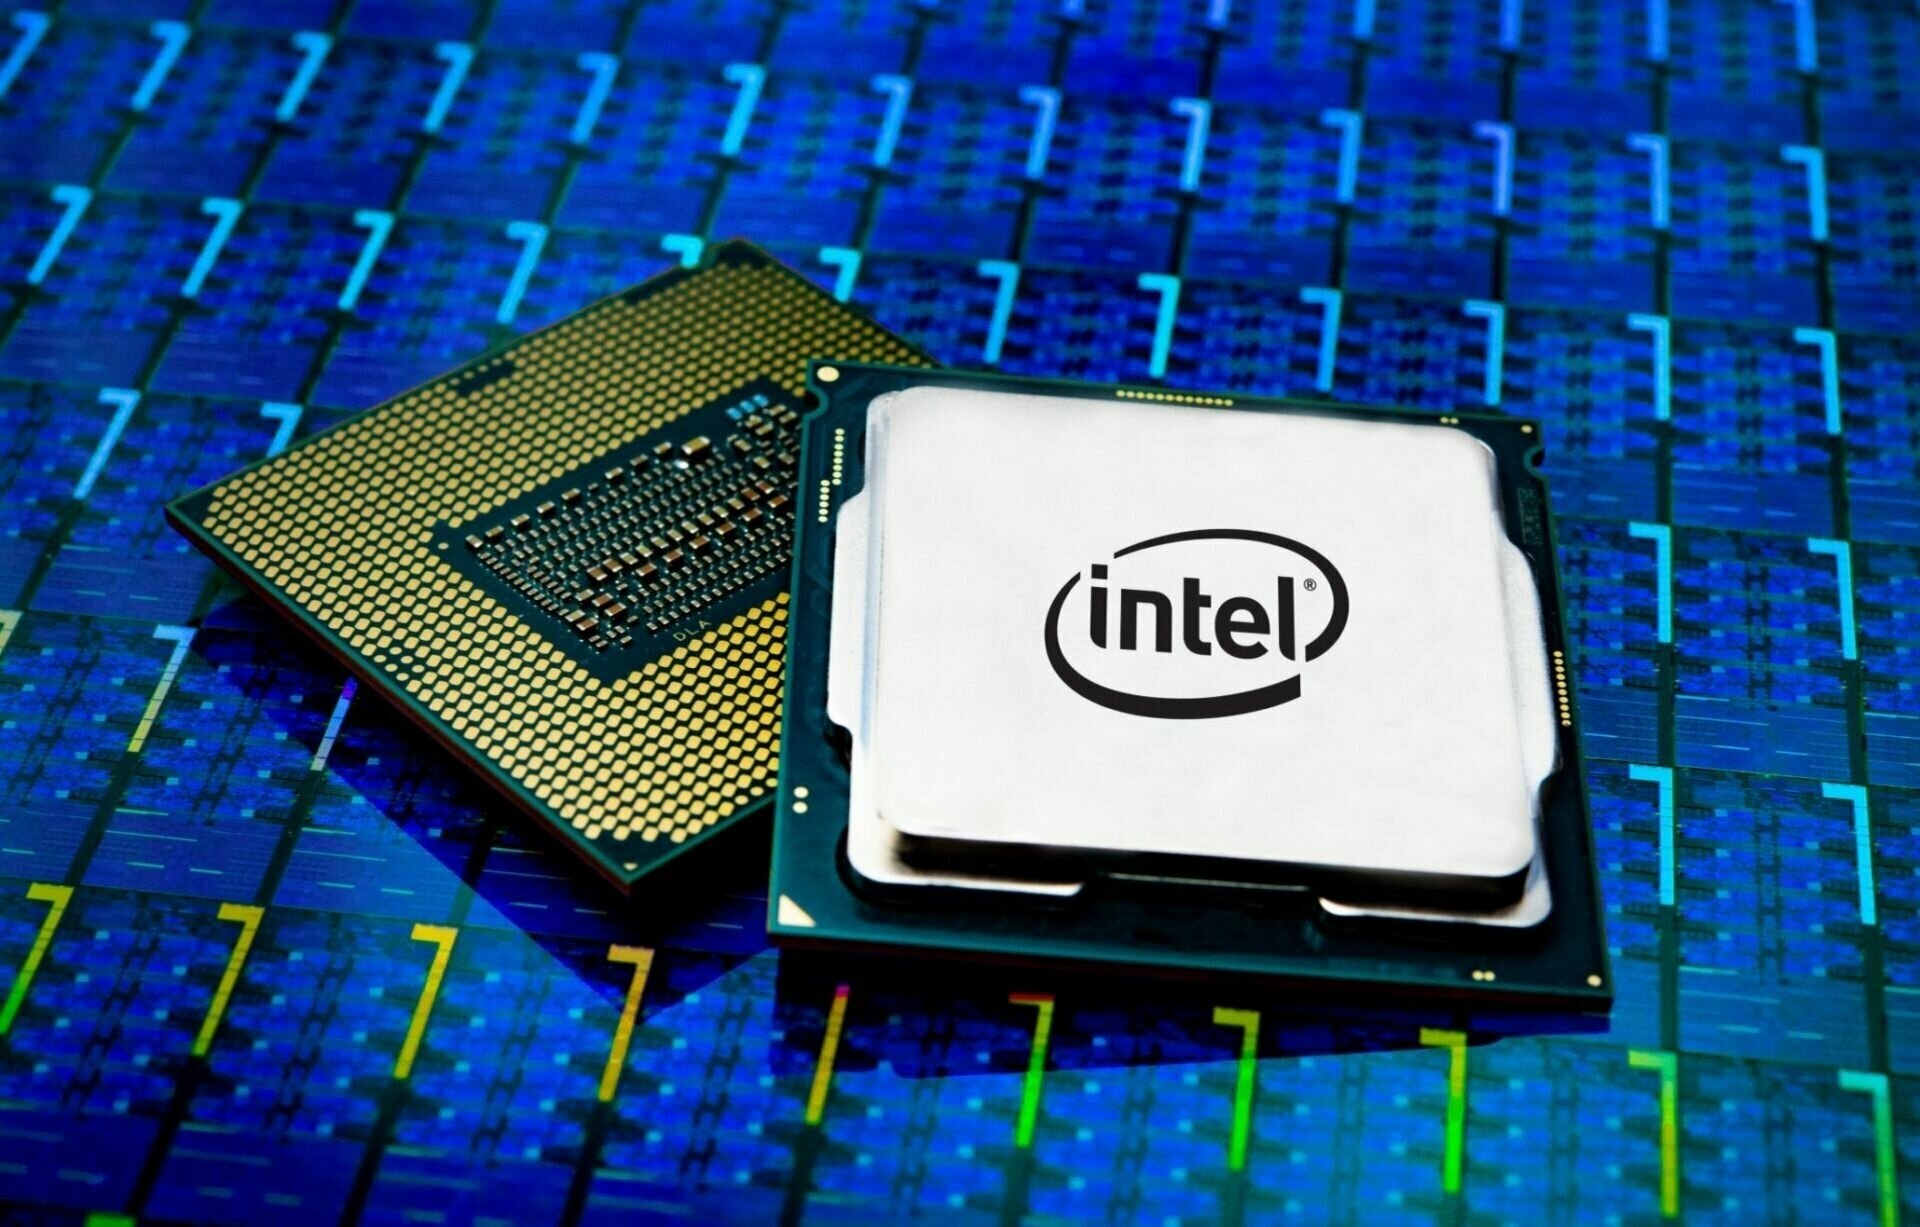 Процессор Intel Core i5-3570 OEM (без кулера)Б\У